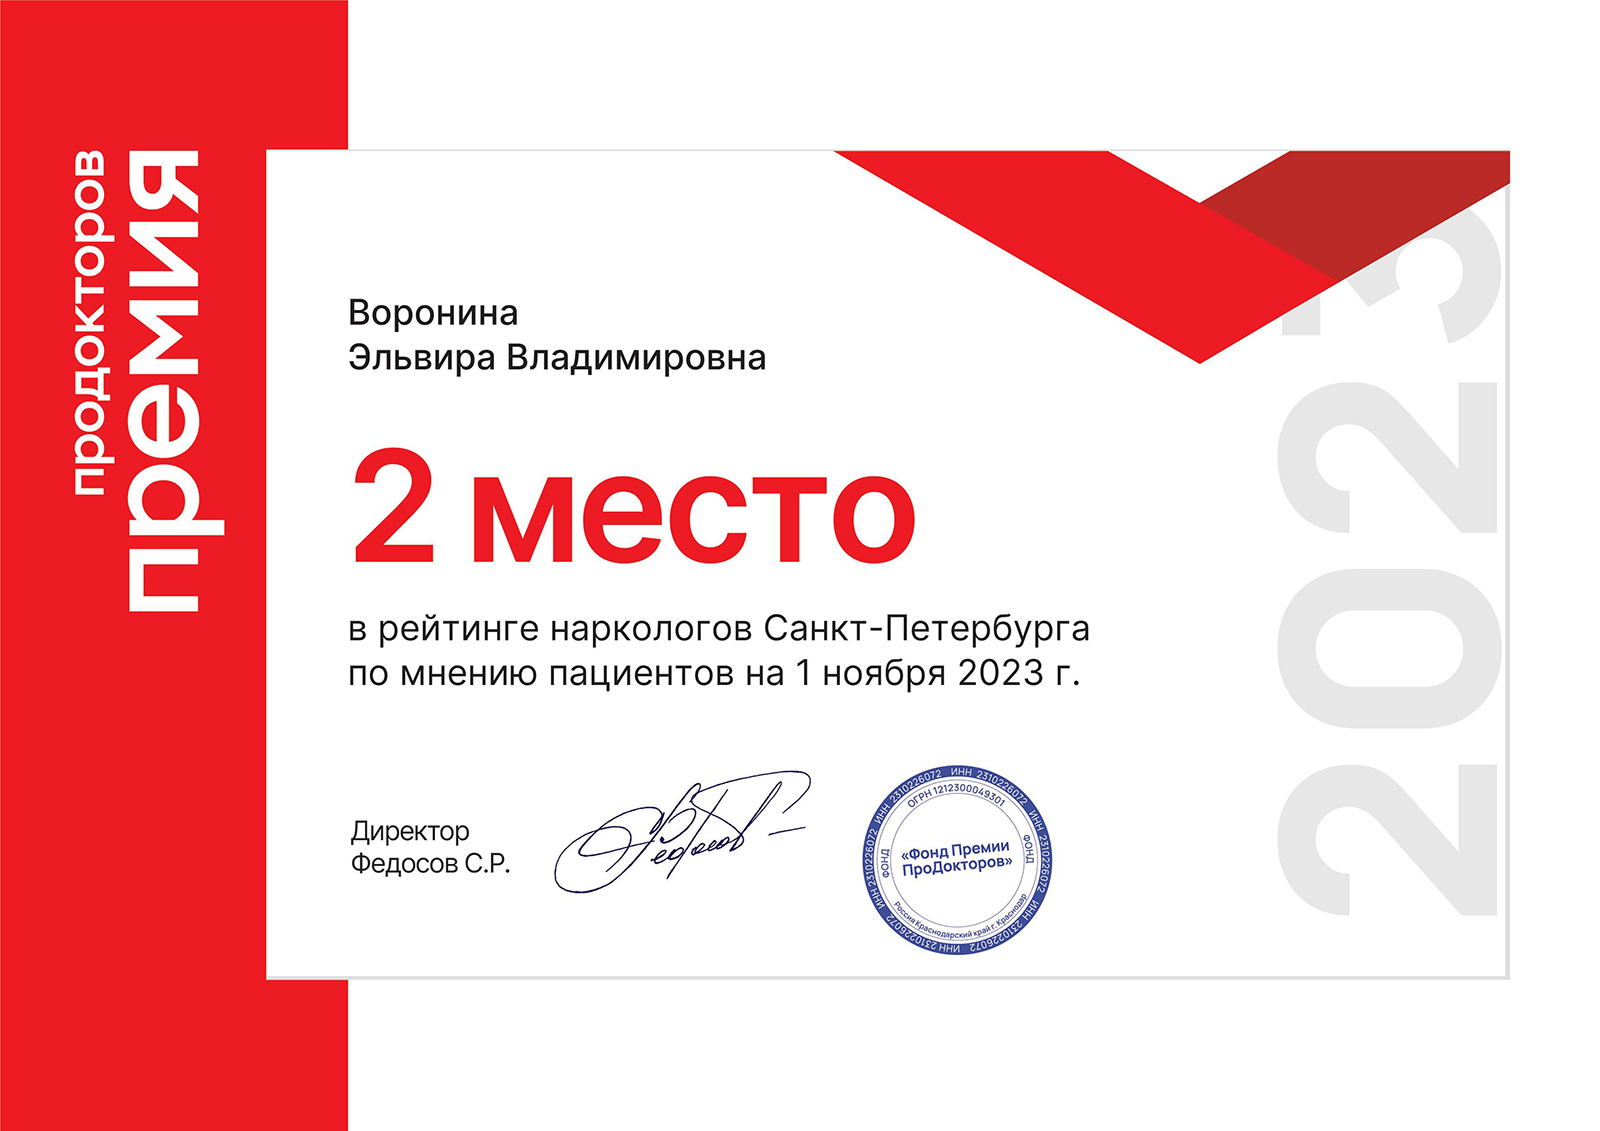 Премия ПроДокторов 2023